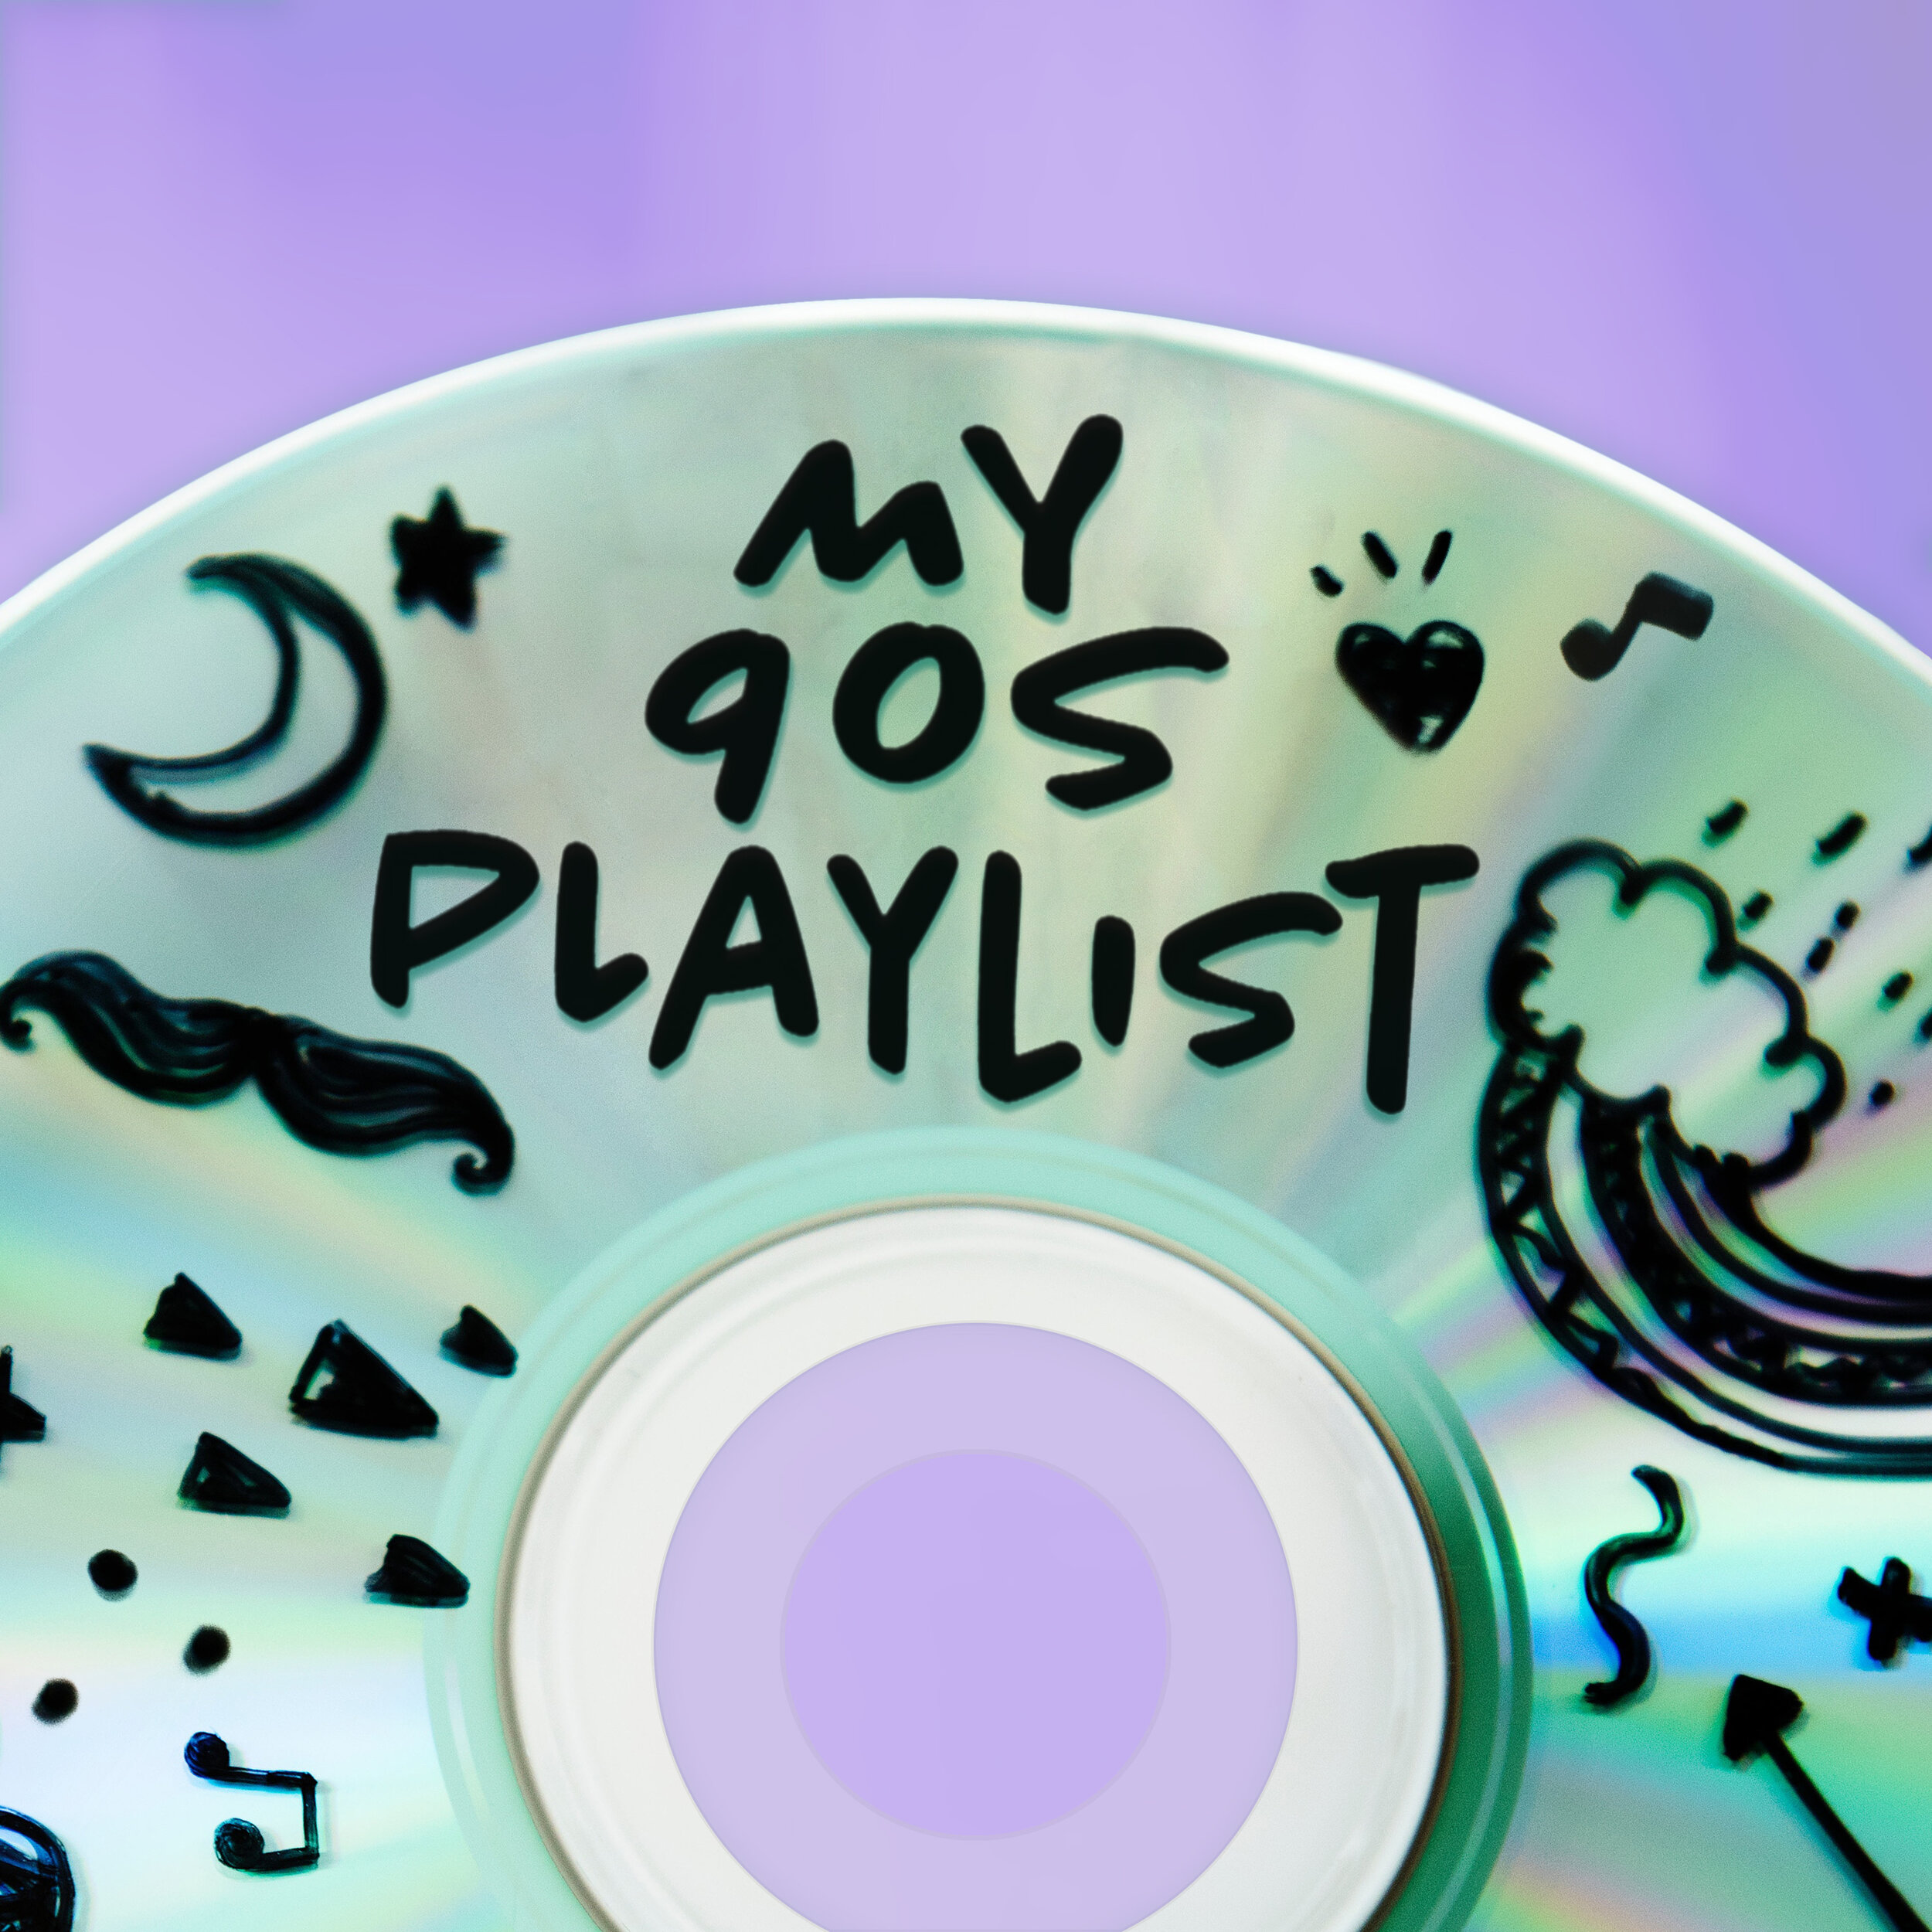 My-90s-Playlist-tile-art_R1 (1).jpg